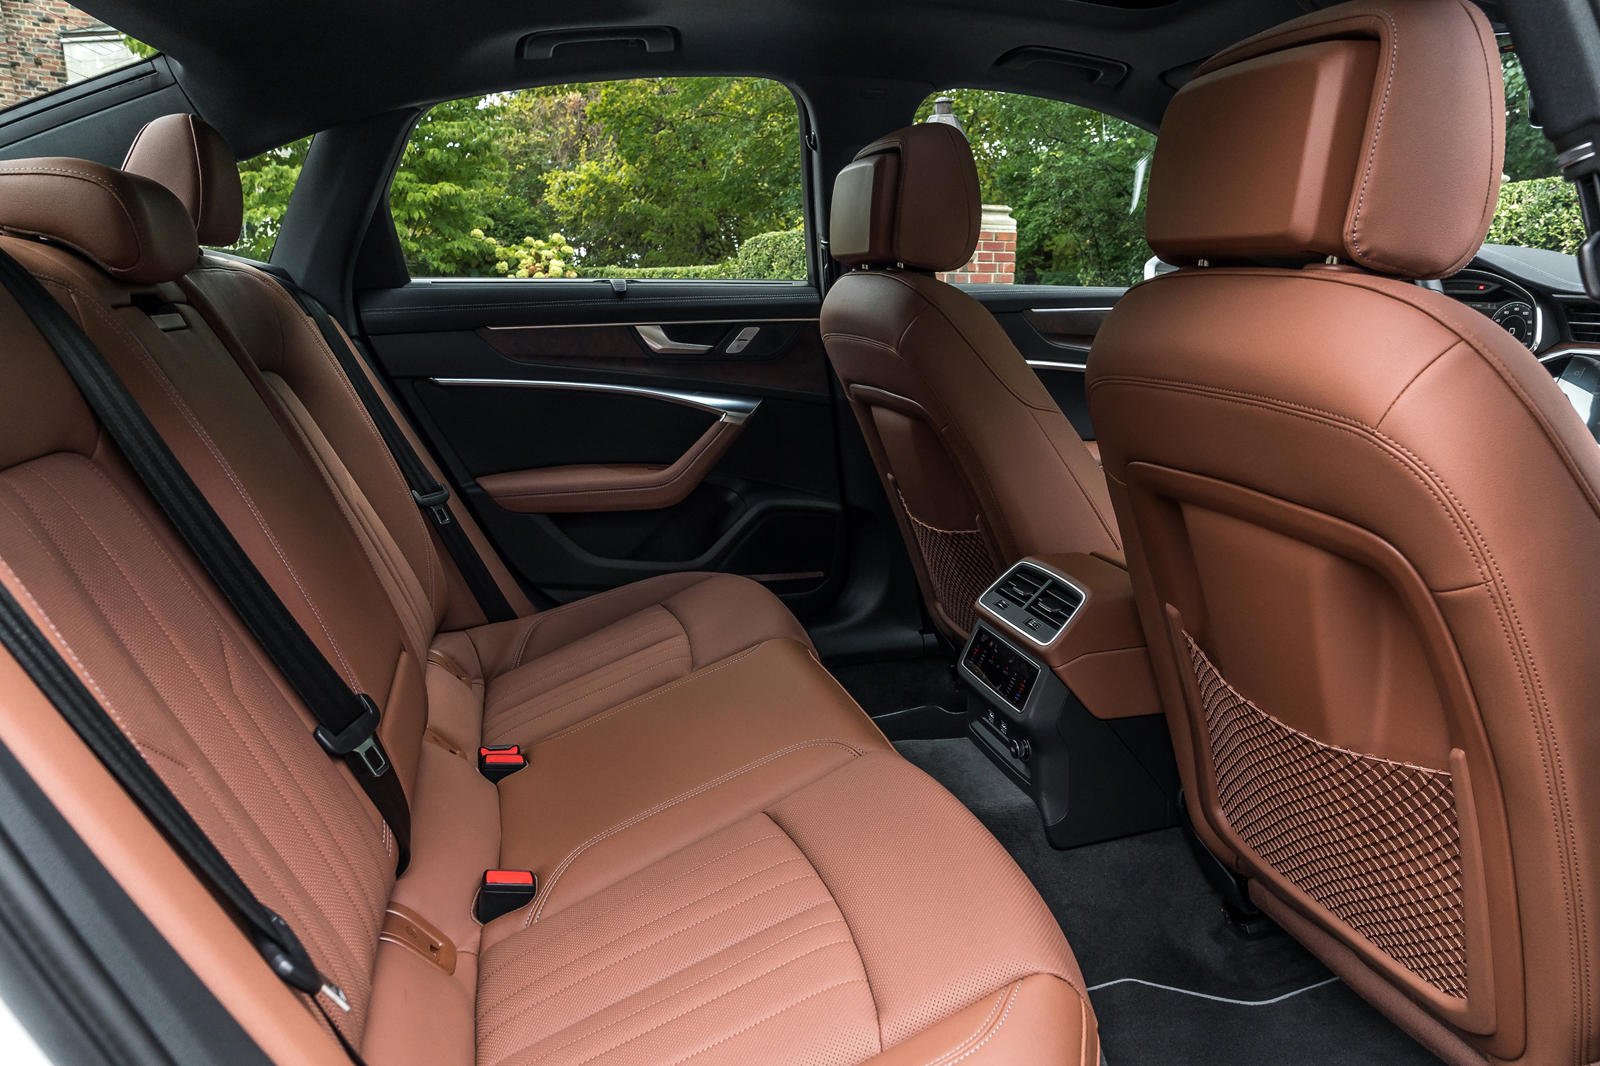 Audi S6 interior - Seats